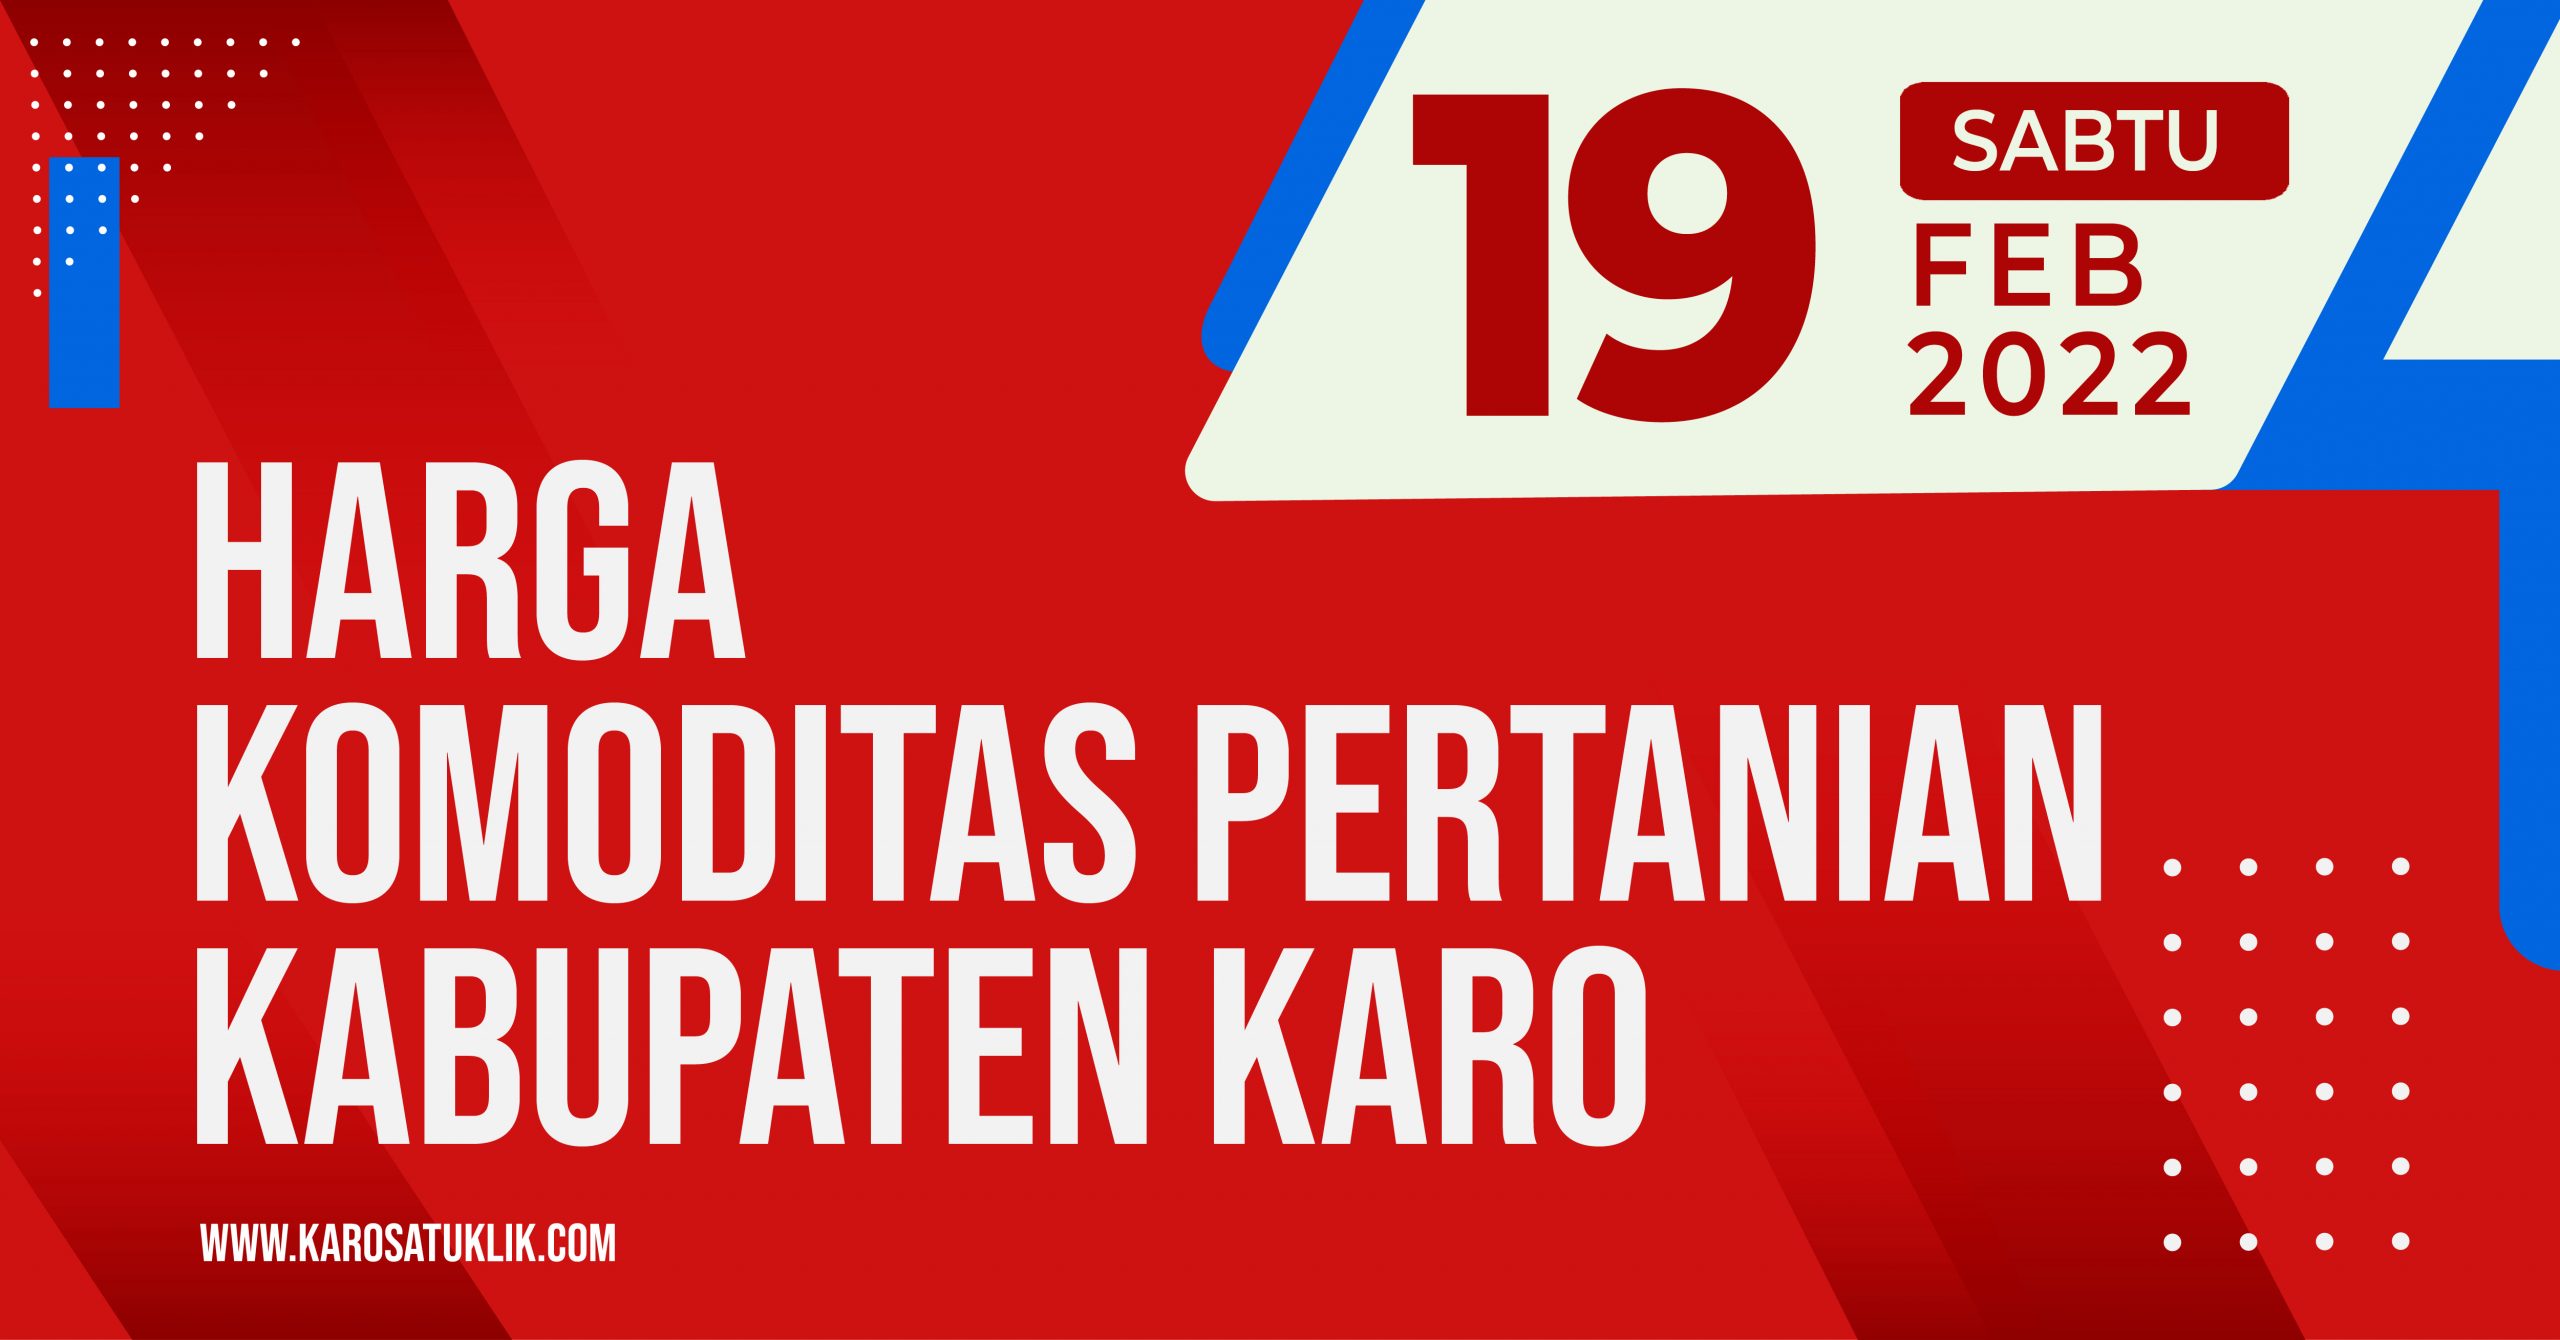 Daftar Harga Komoditas Pertanian Kabupaten Karo, 19 Februari 2022